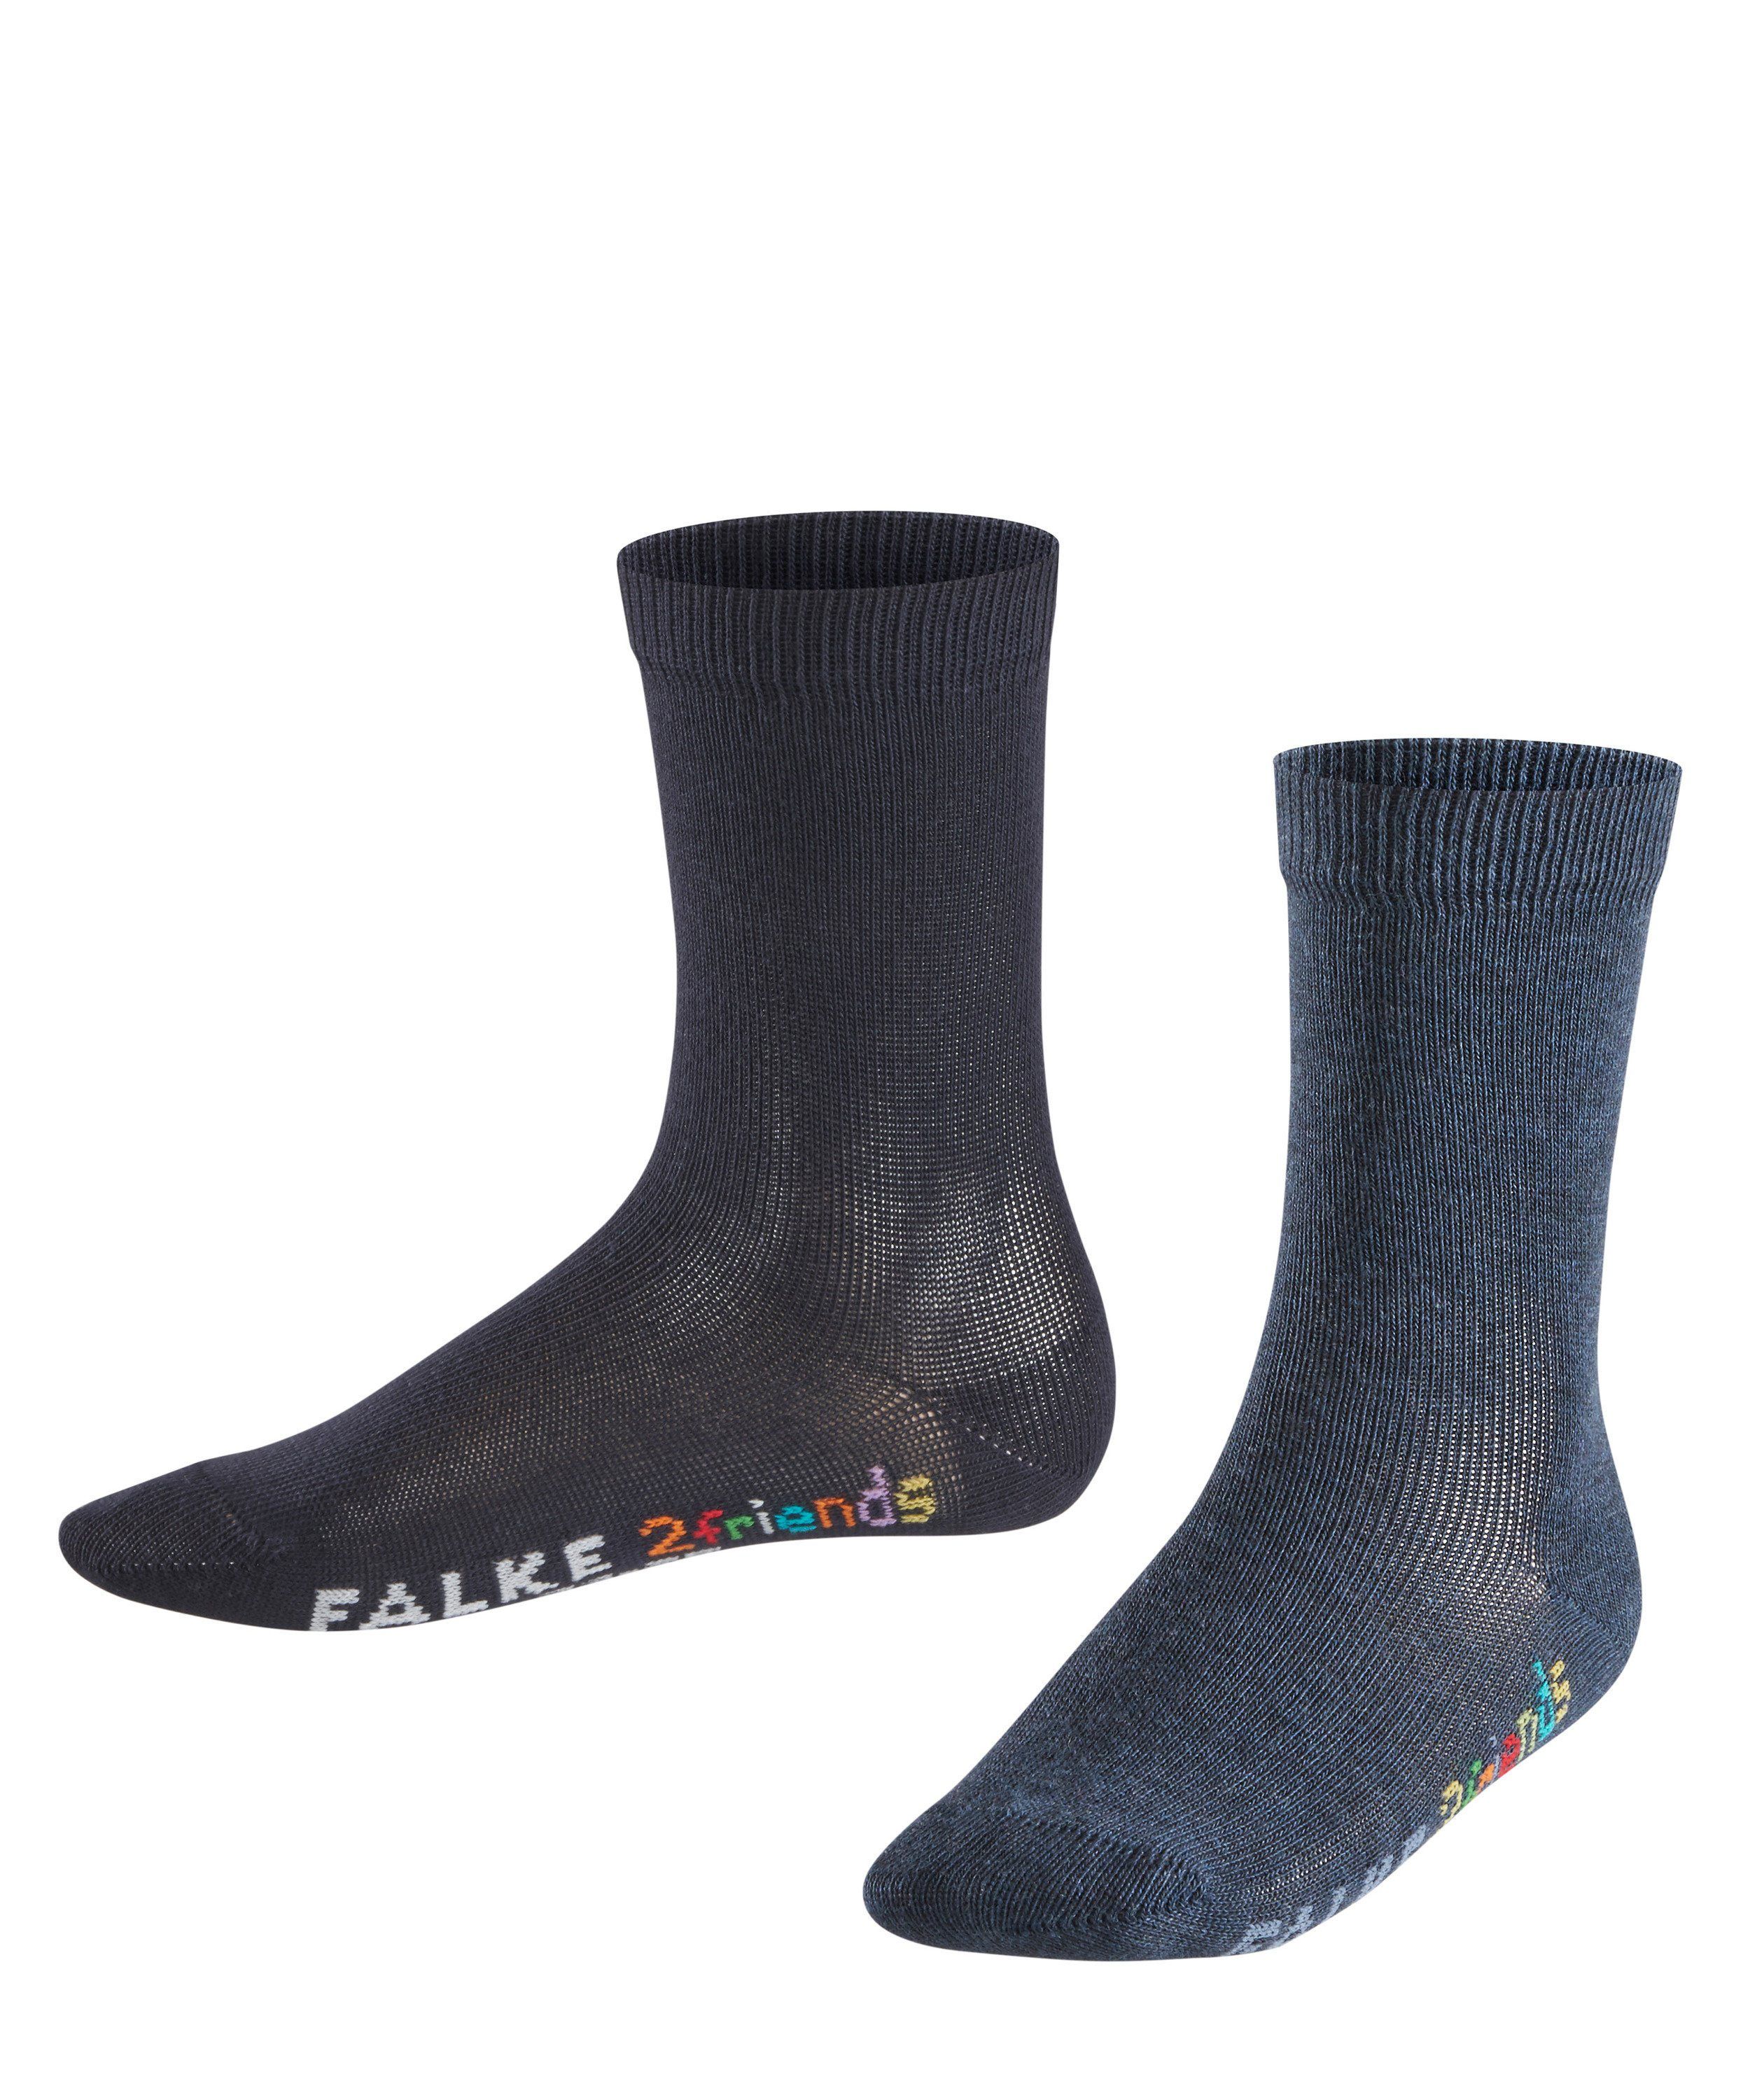 Falke - 2 Friends Anklet